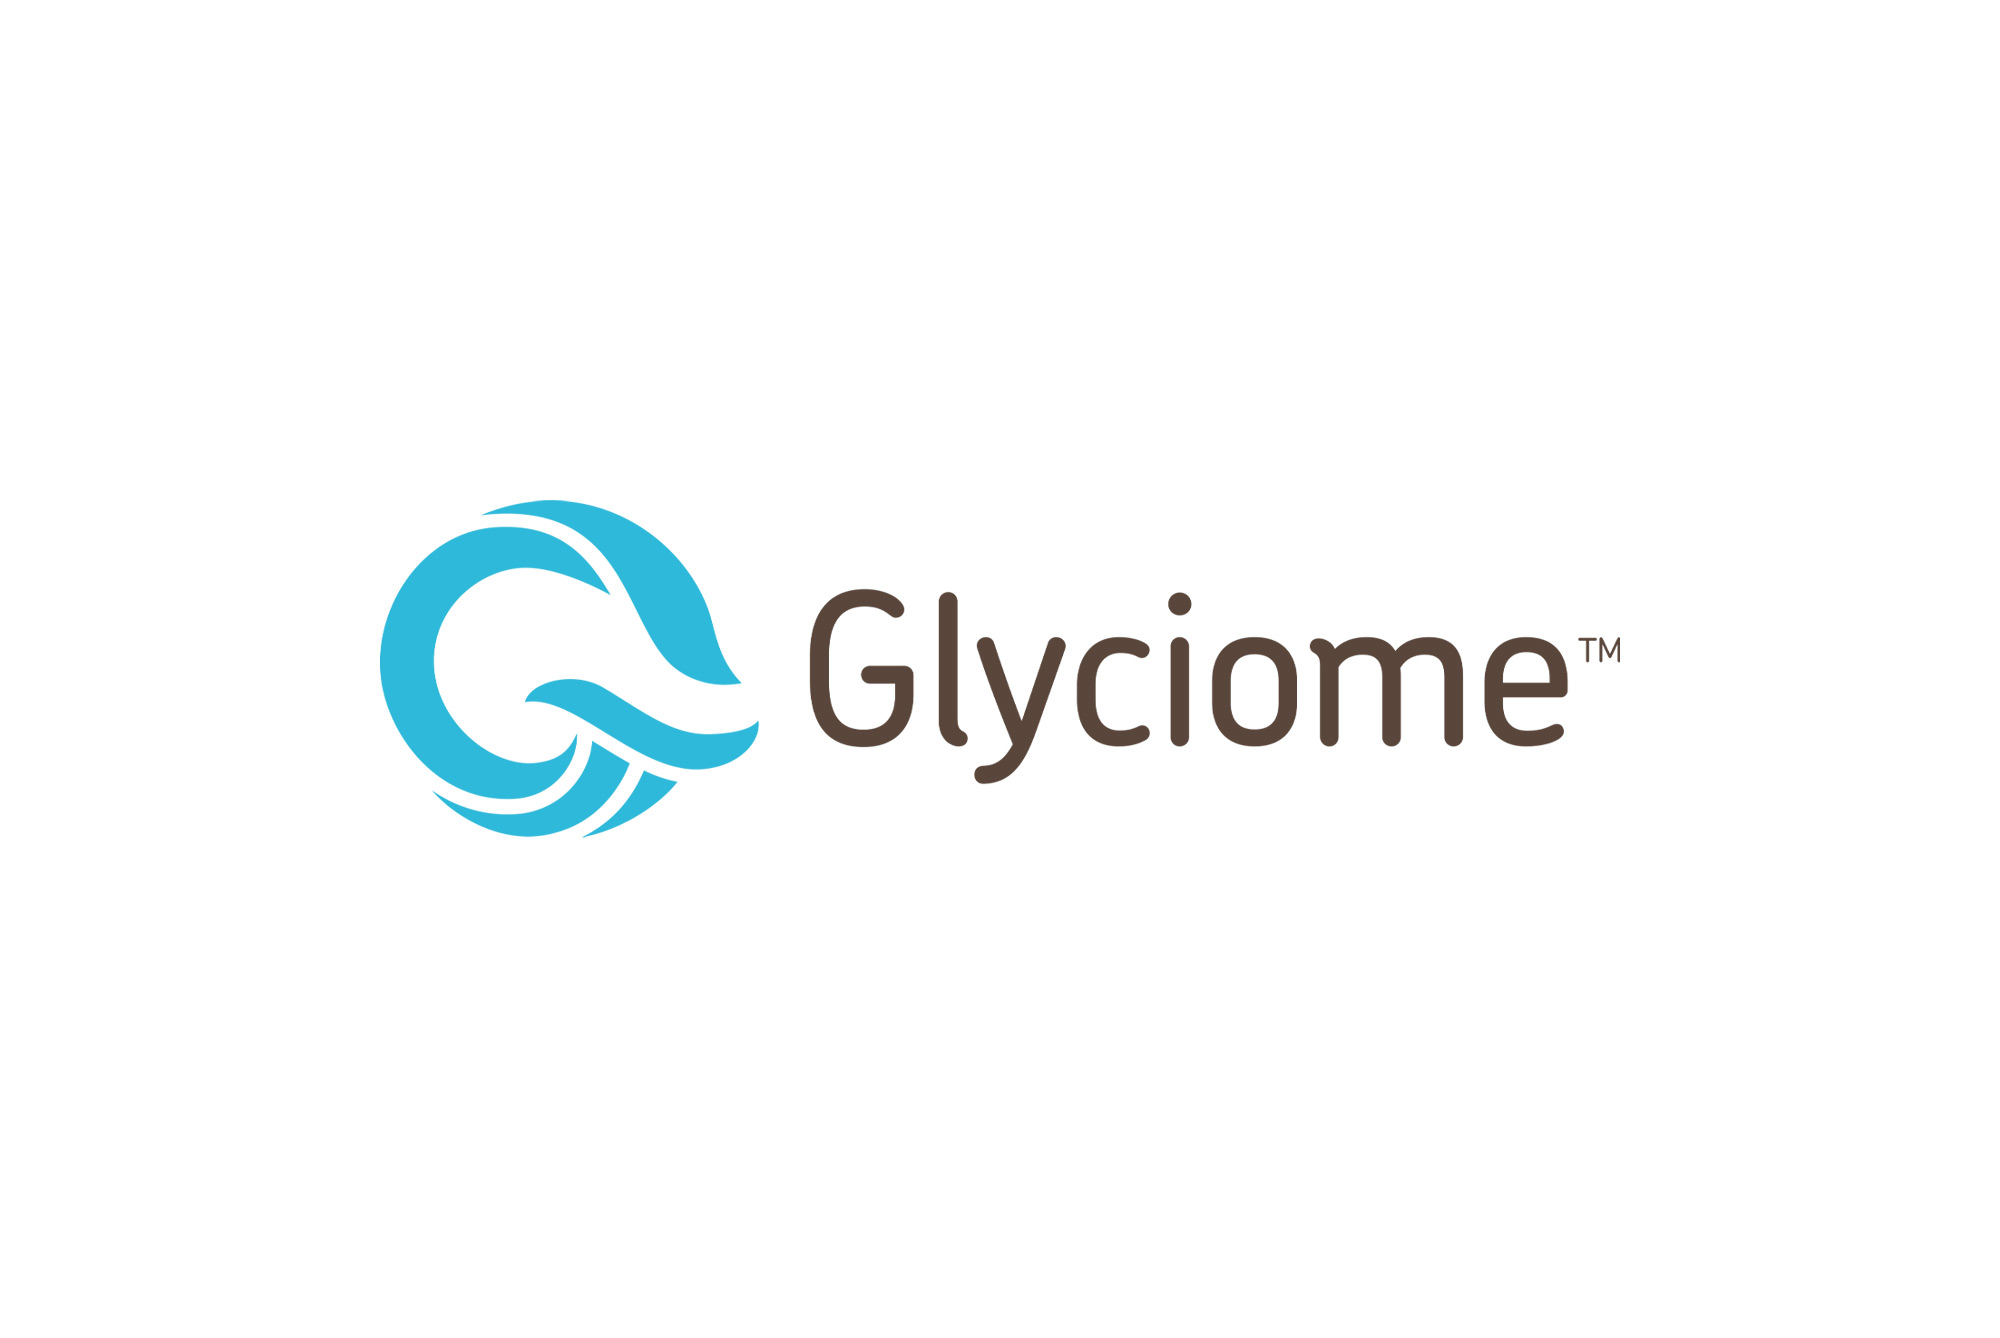 Brand logo design for States side biomedical company Glyciome.